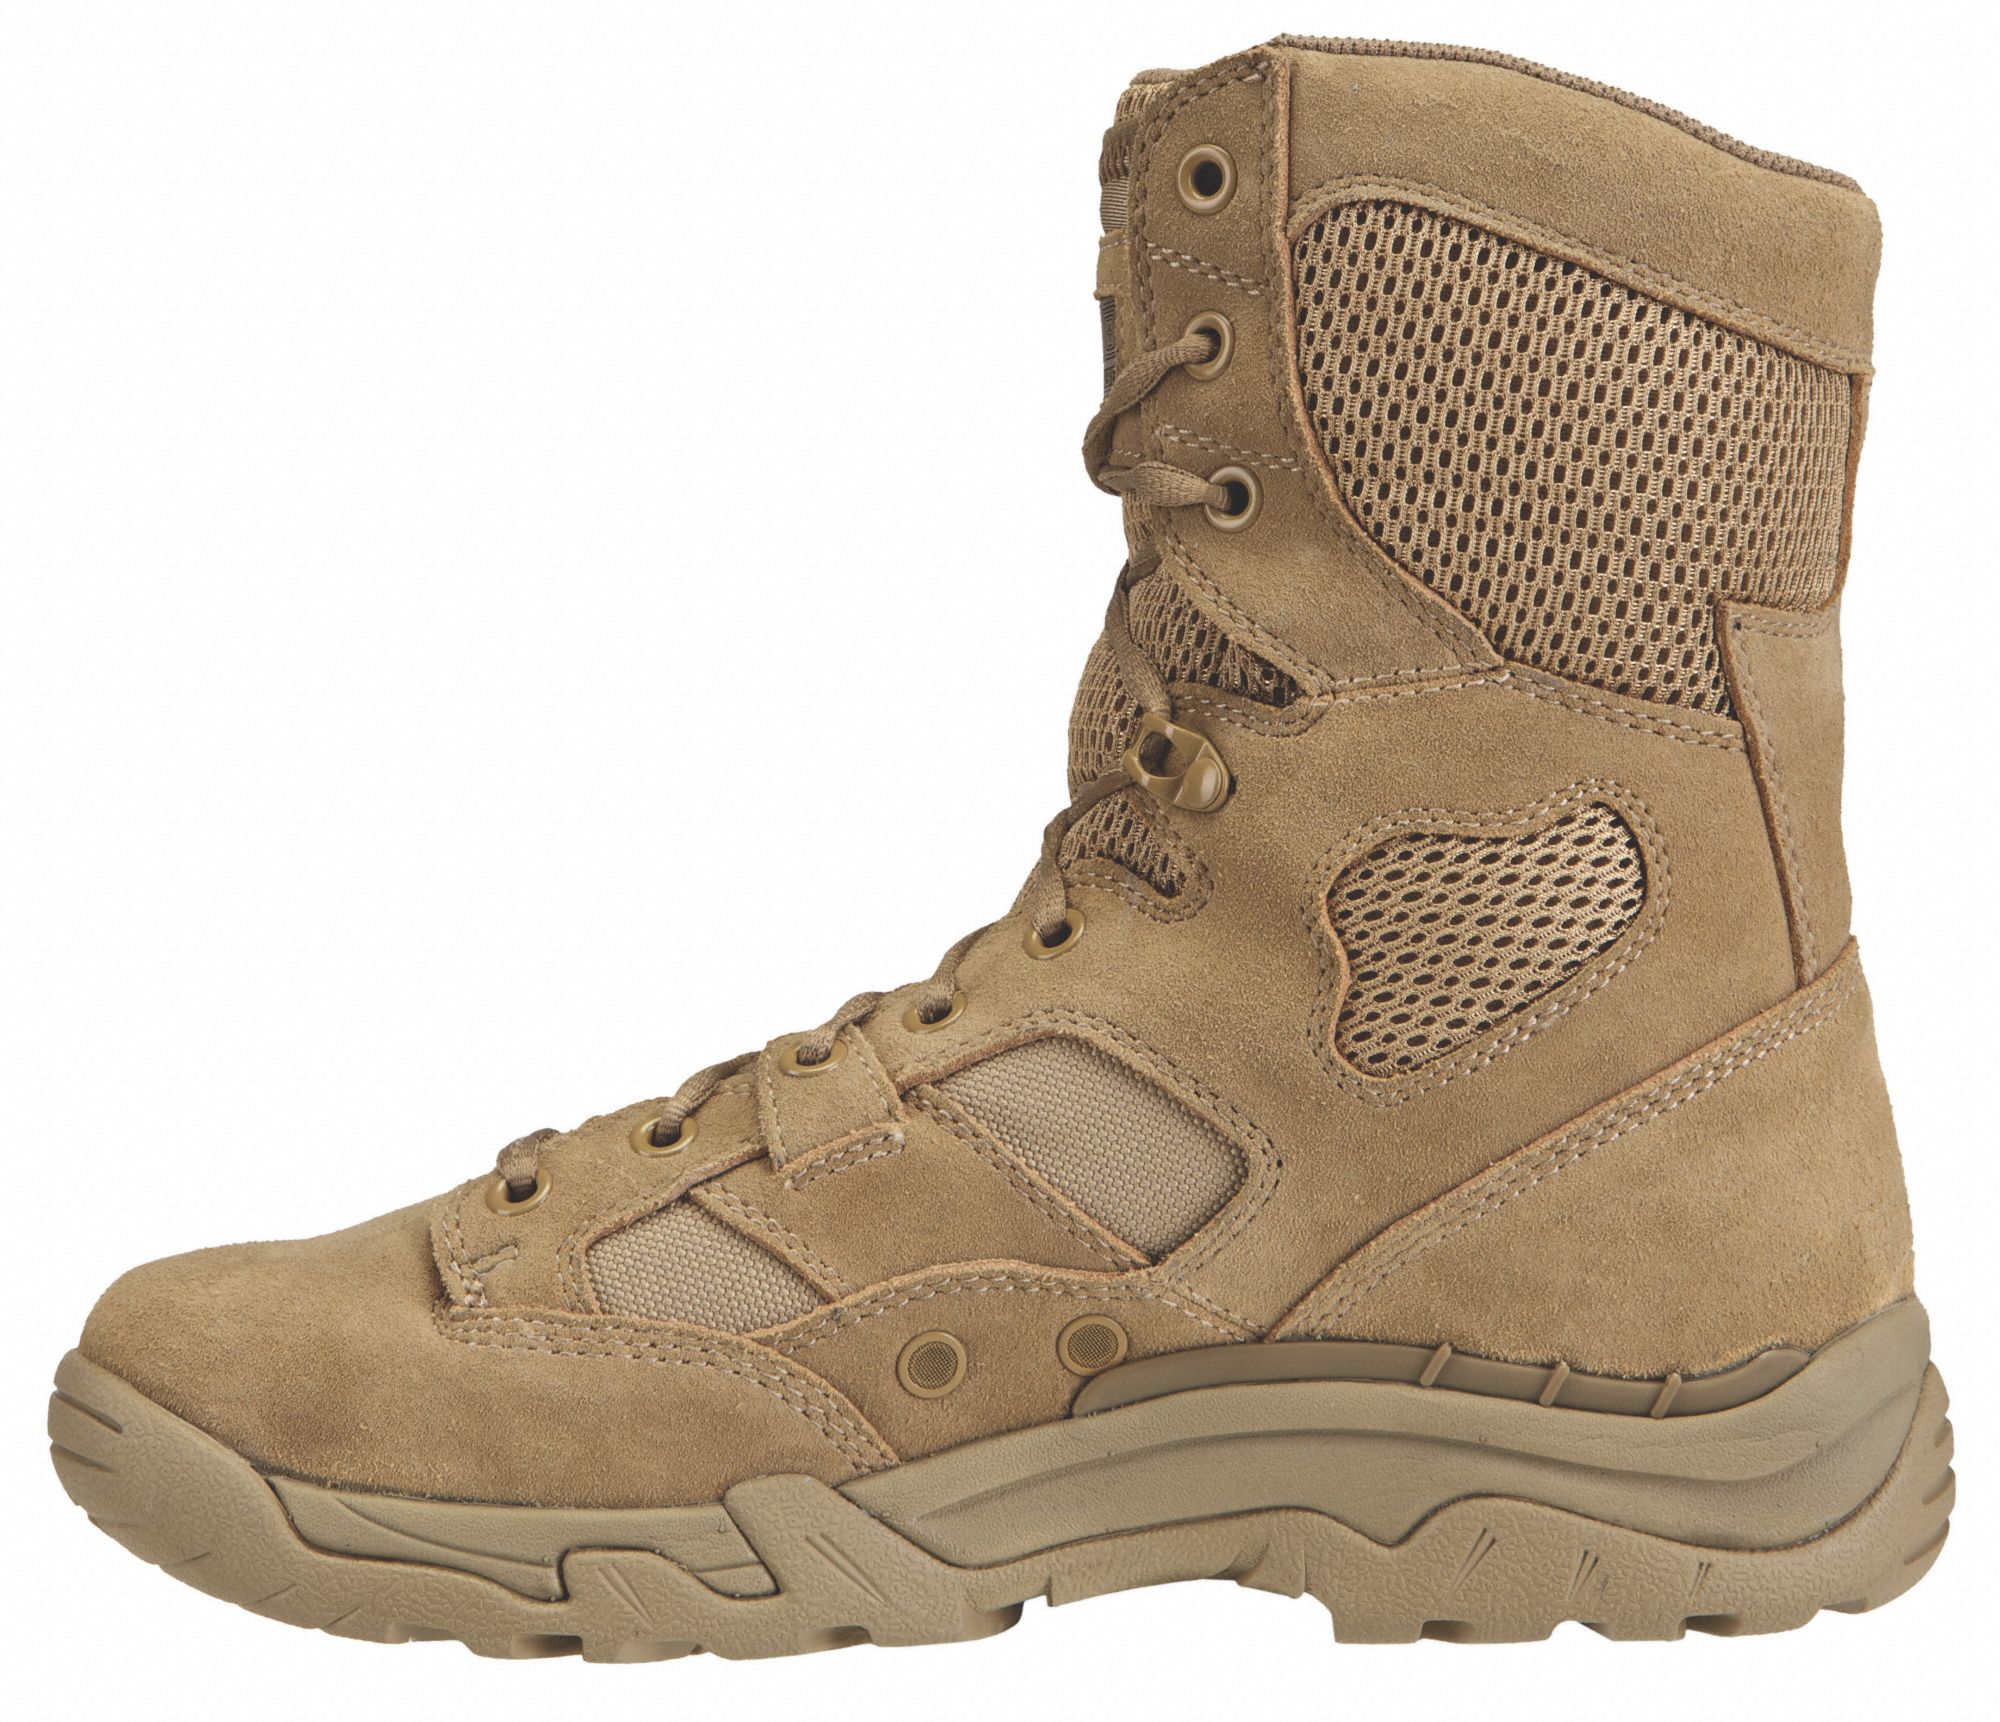 5.11 TACTICAL TACLITE Boots, 4R, Coyote, Lace Up, PR - 14X670|12031 ...